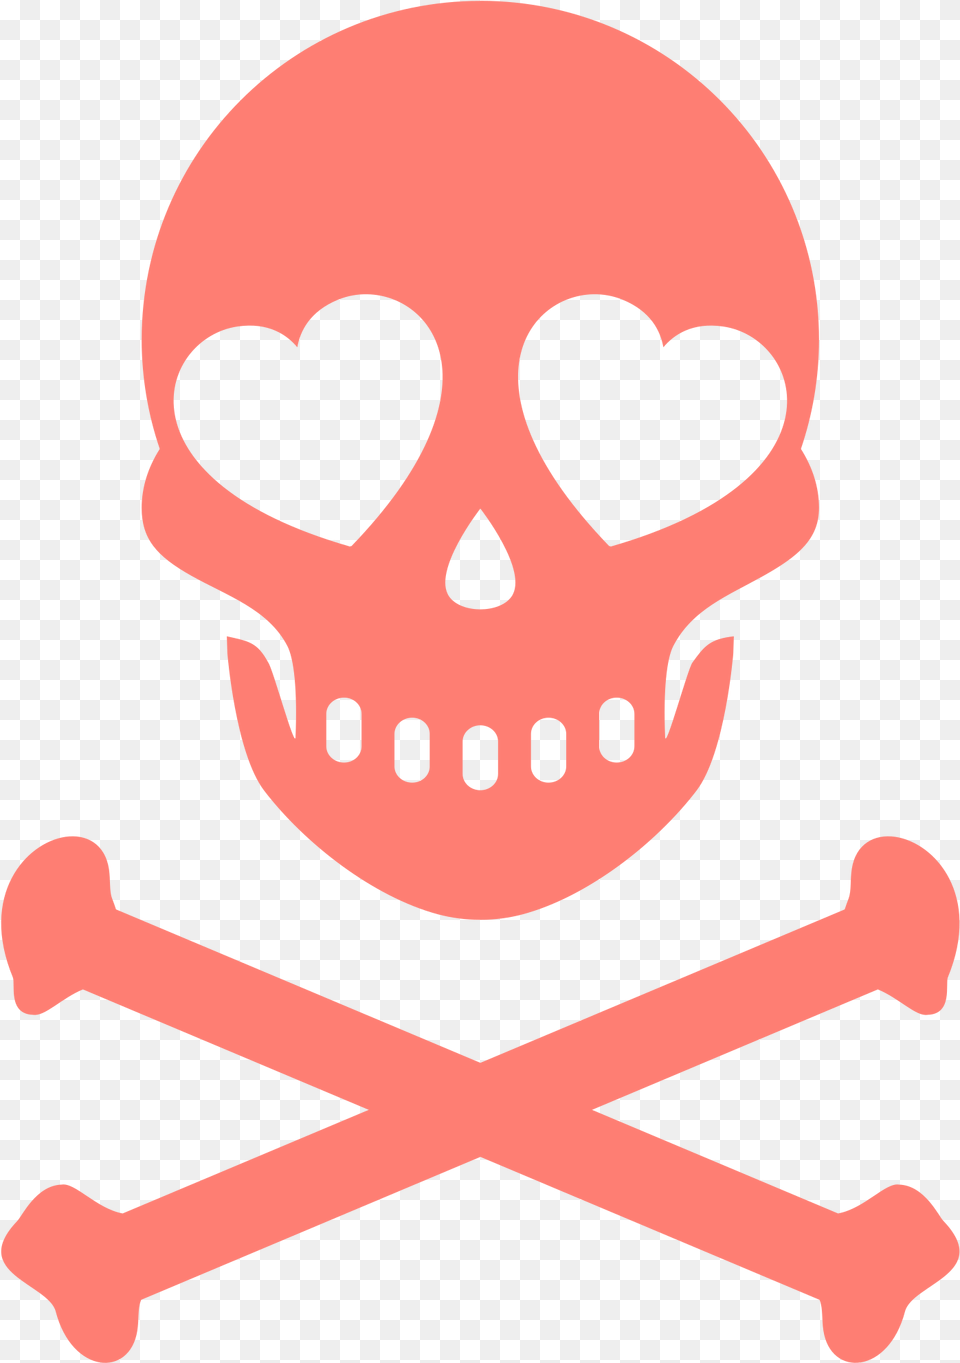 Skull And Bones Skull And Crossbones Human Skull Symbolism Percy Jackson Books Symbols, Baby, Face, Head, Mortar Shell Free Png Download